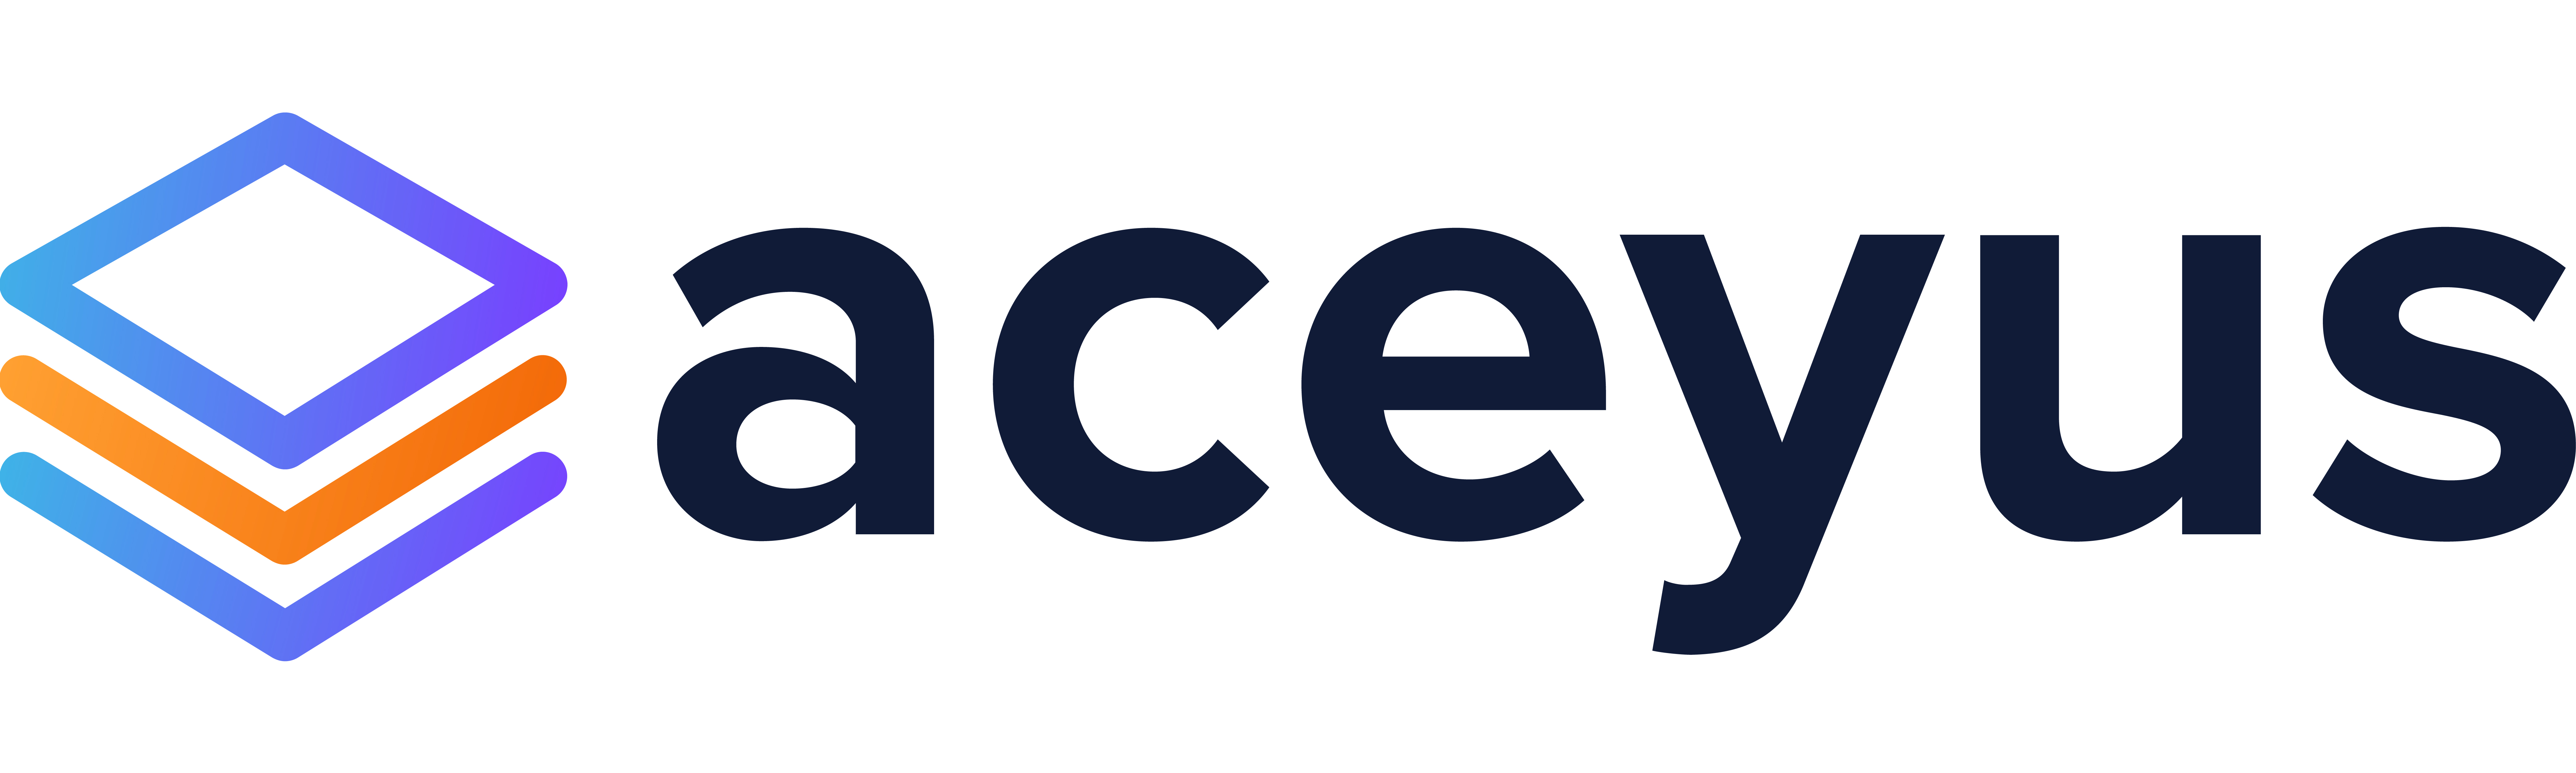 aceyus-logo